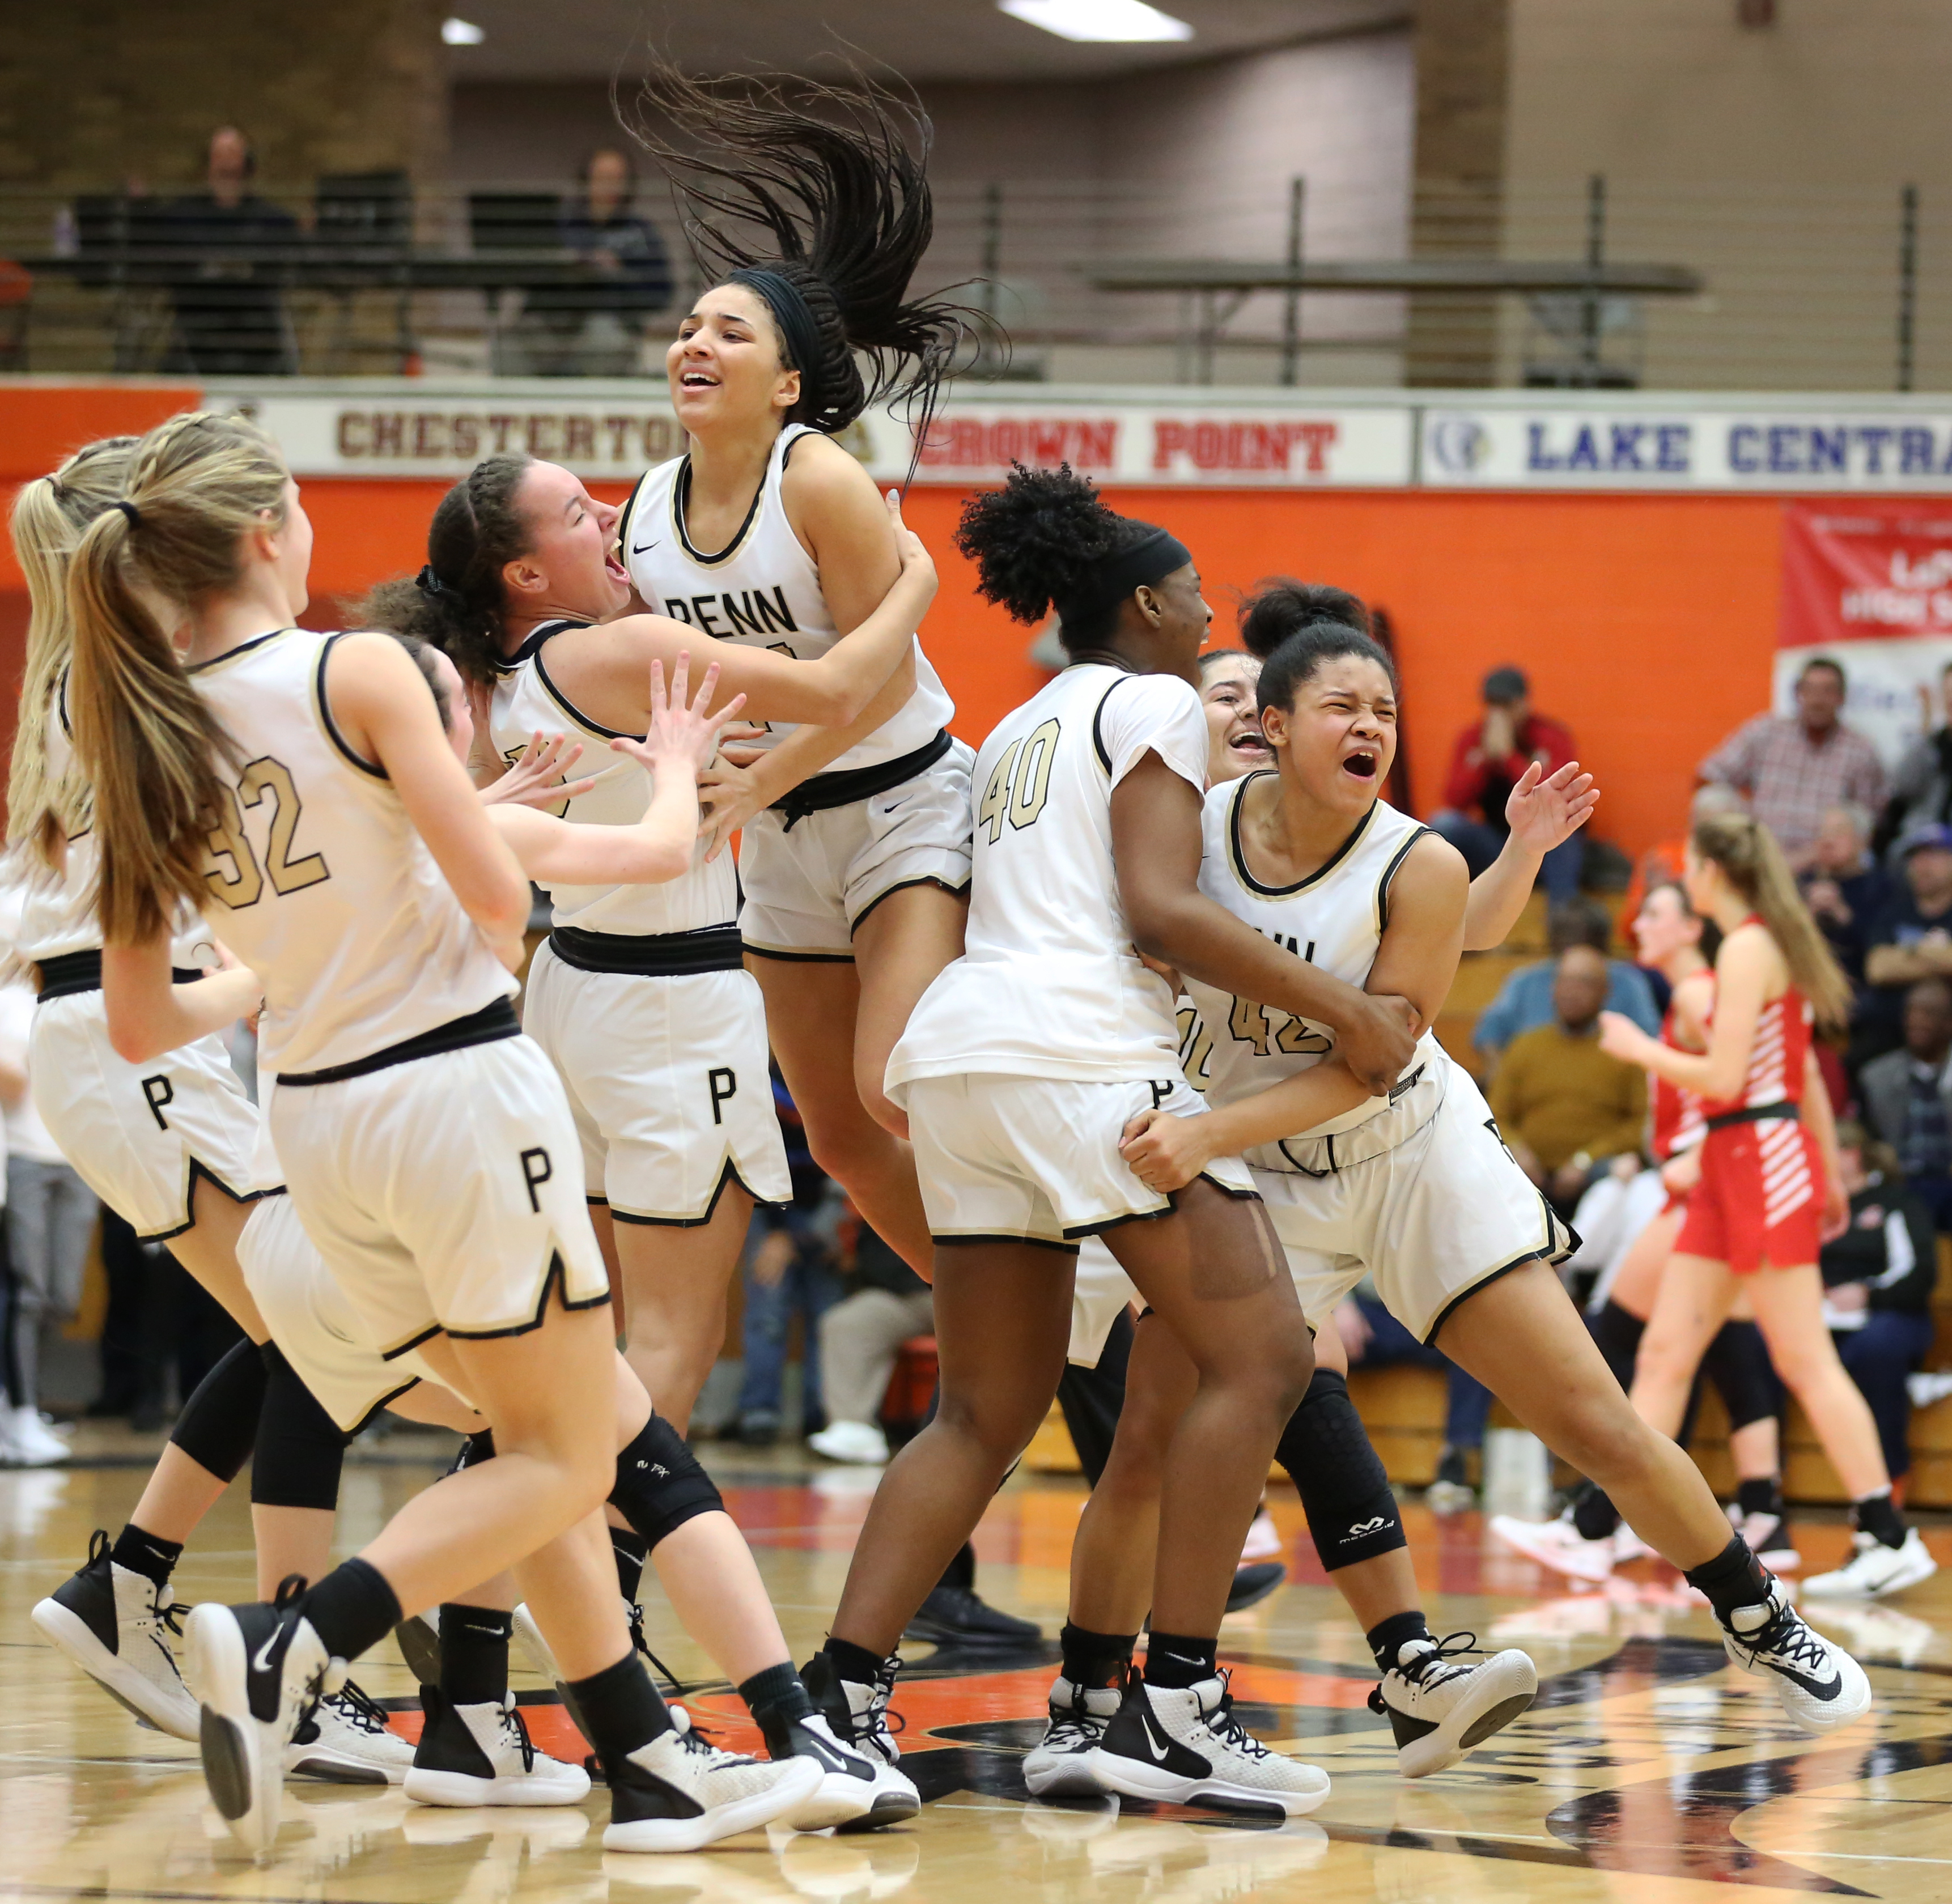 Penn Girls Basketball celebrates Regional victory vs. Crown Point.